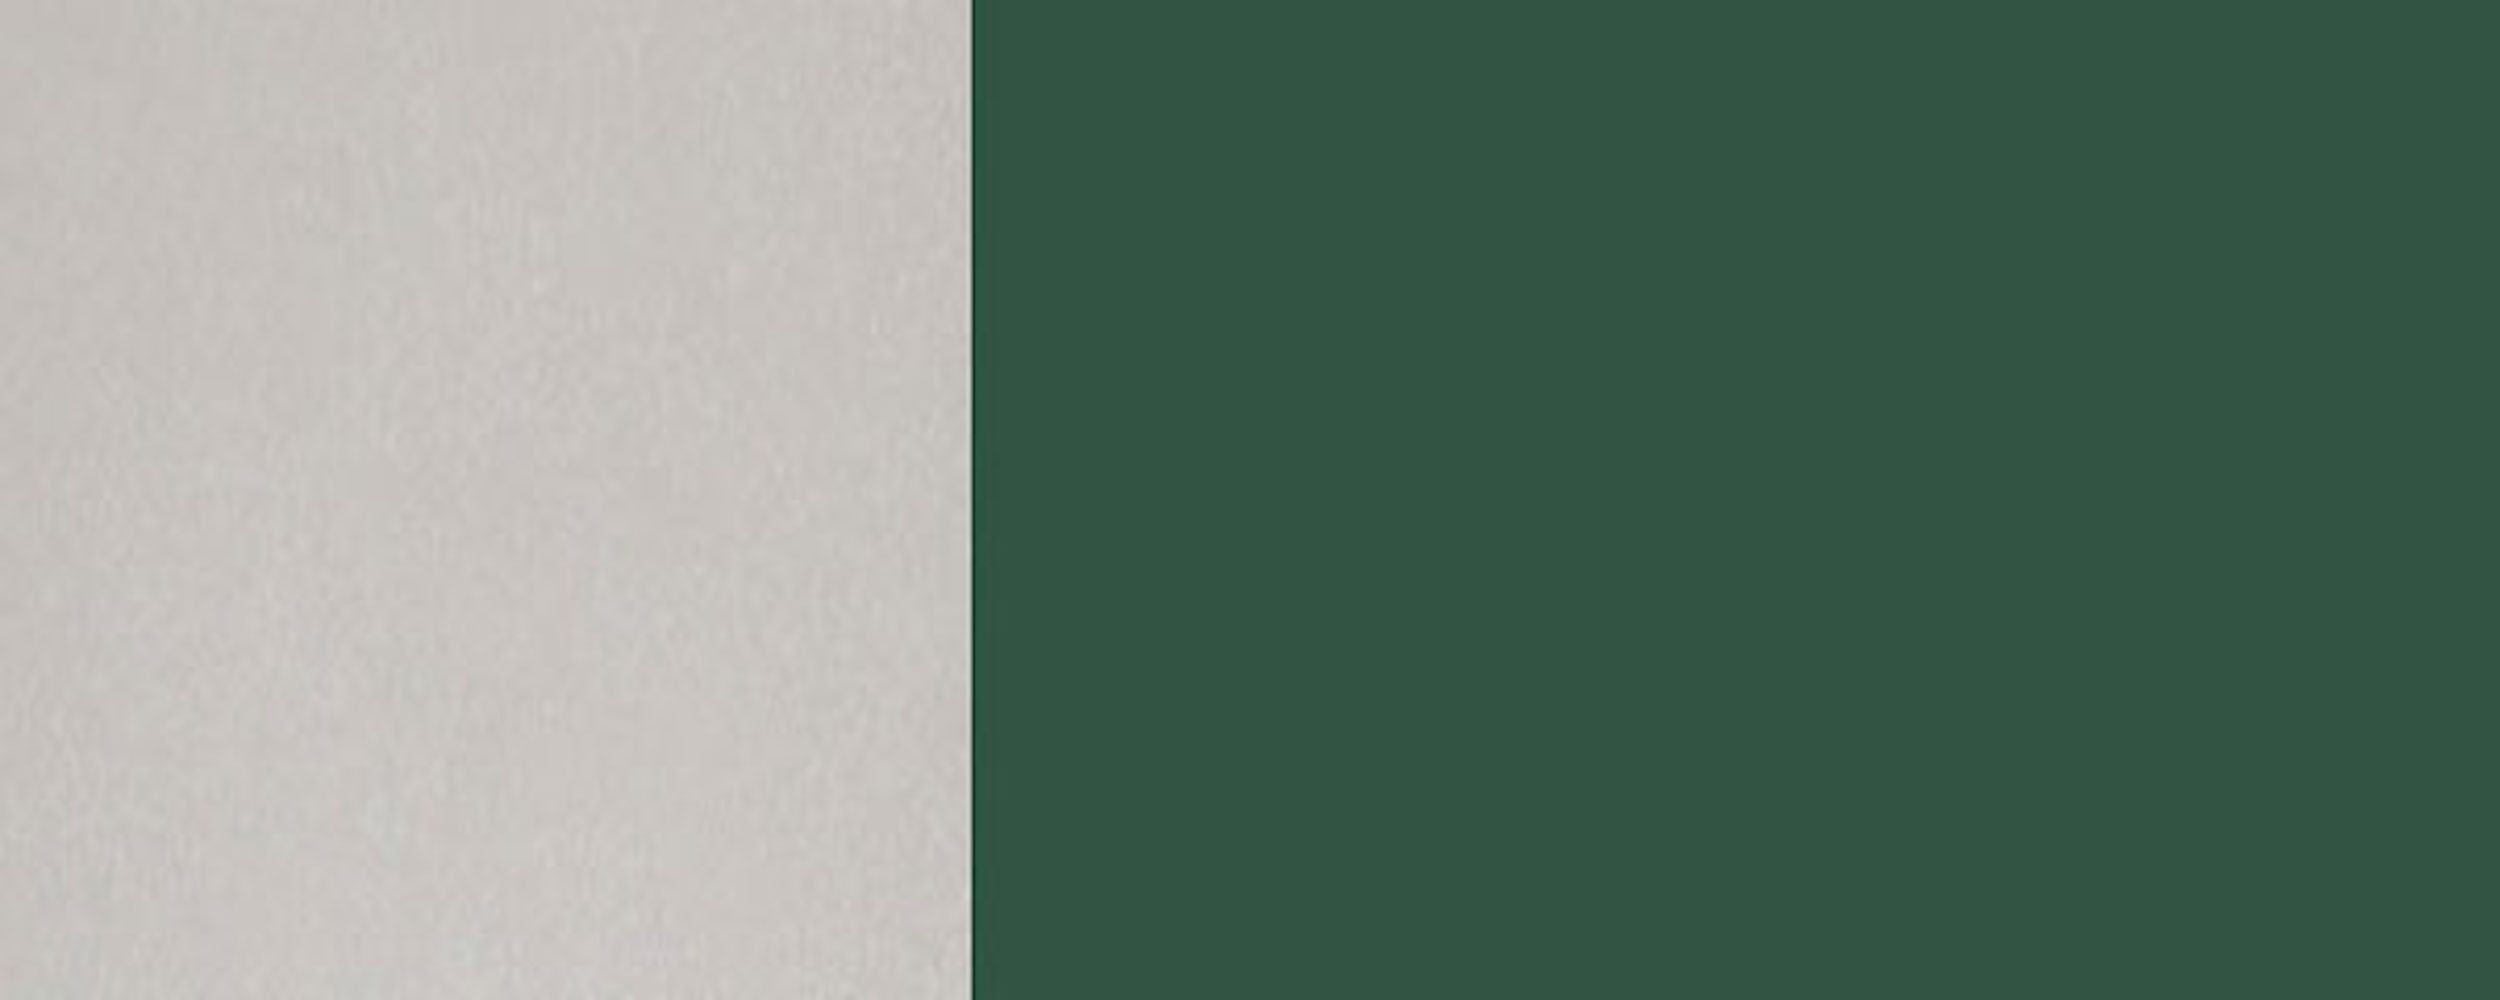 1-türig RAL und Korpusfarbe 6028 kieferngrün matt Front- 40cm Klapphängeschrank wählbar Tivoli (Tivoli) Feldmann-Wohnen